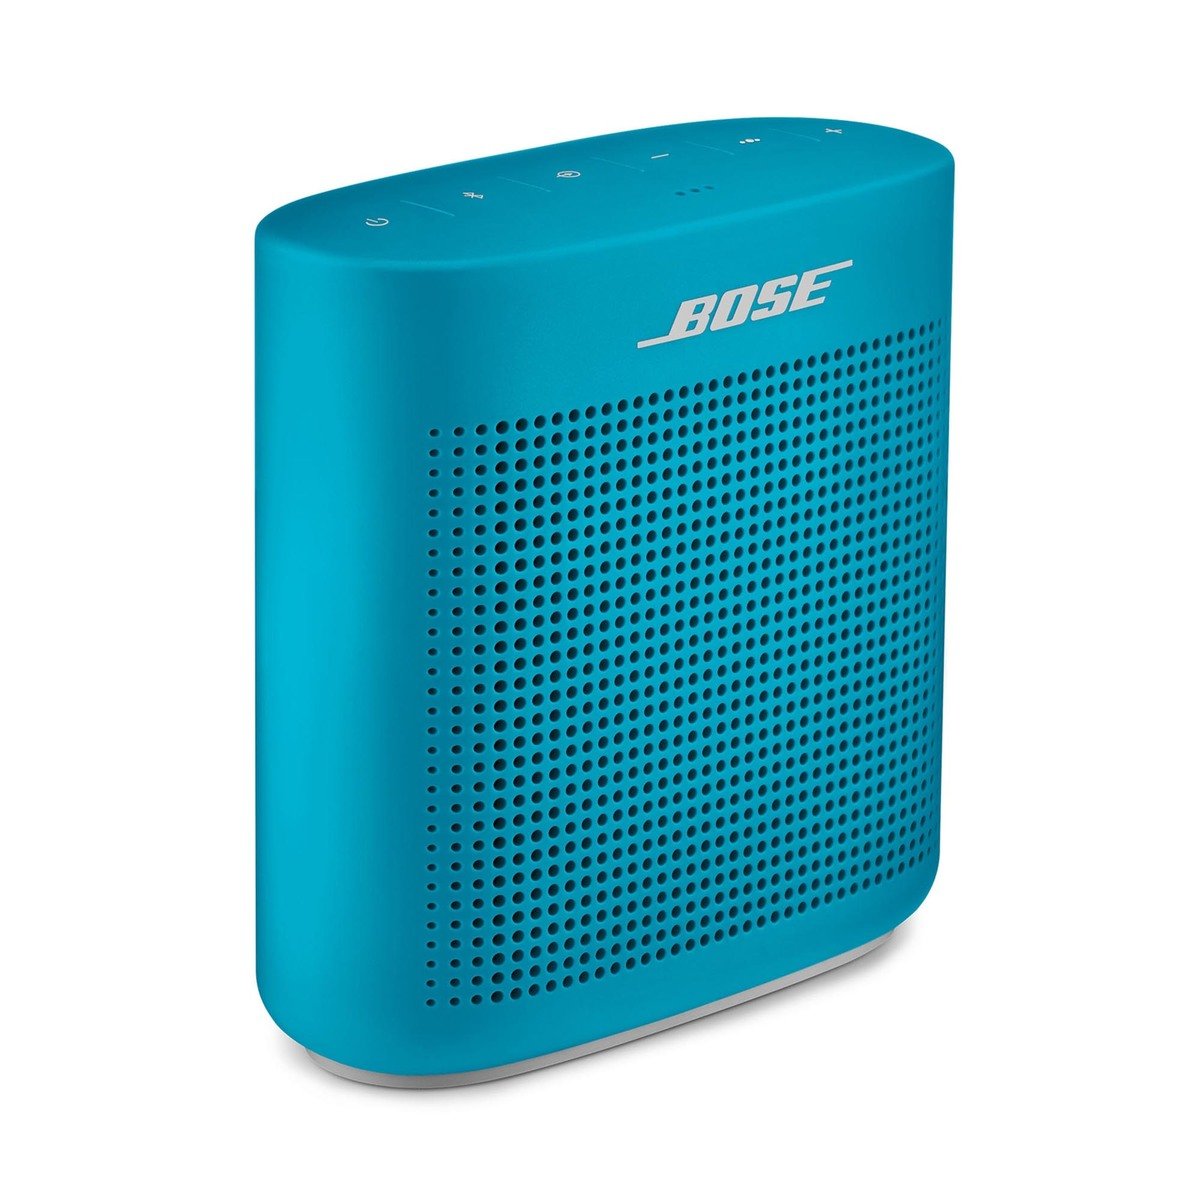 Bose SoundLink Color II Bluetooth Speakers 752195-0500 Aquatic Blue